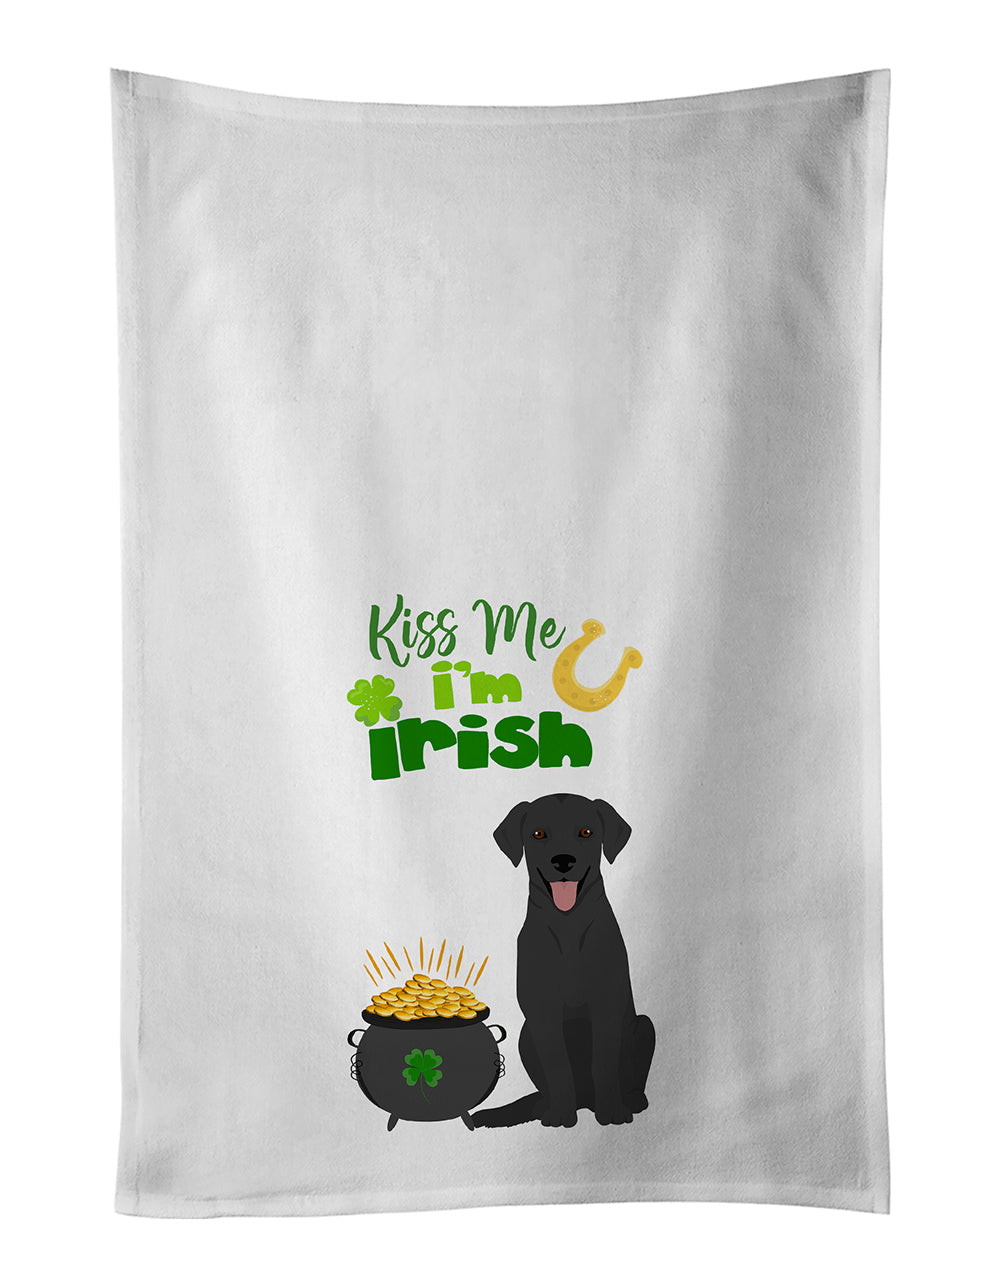 Buy this Black Labrador Retriever St. Patrick's Day White Kitchen Towel Set of 2 Dish Towels